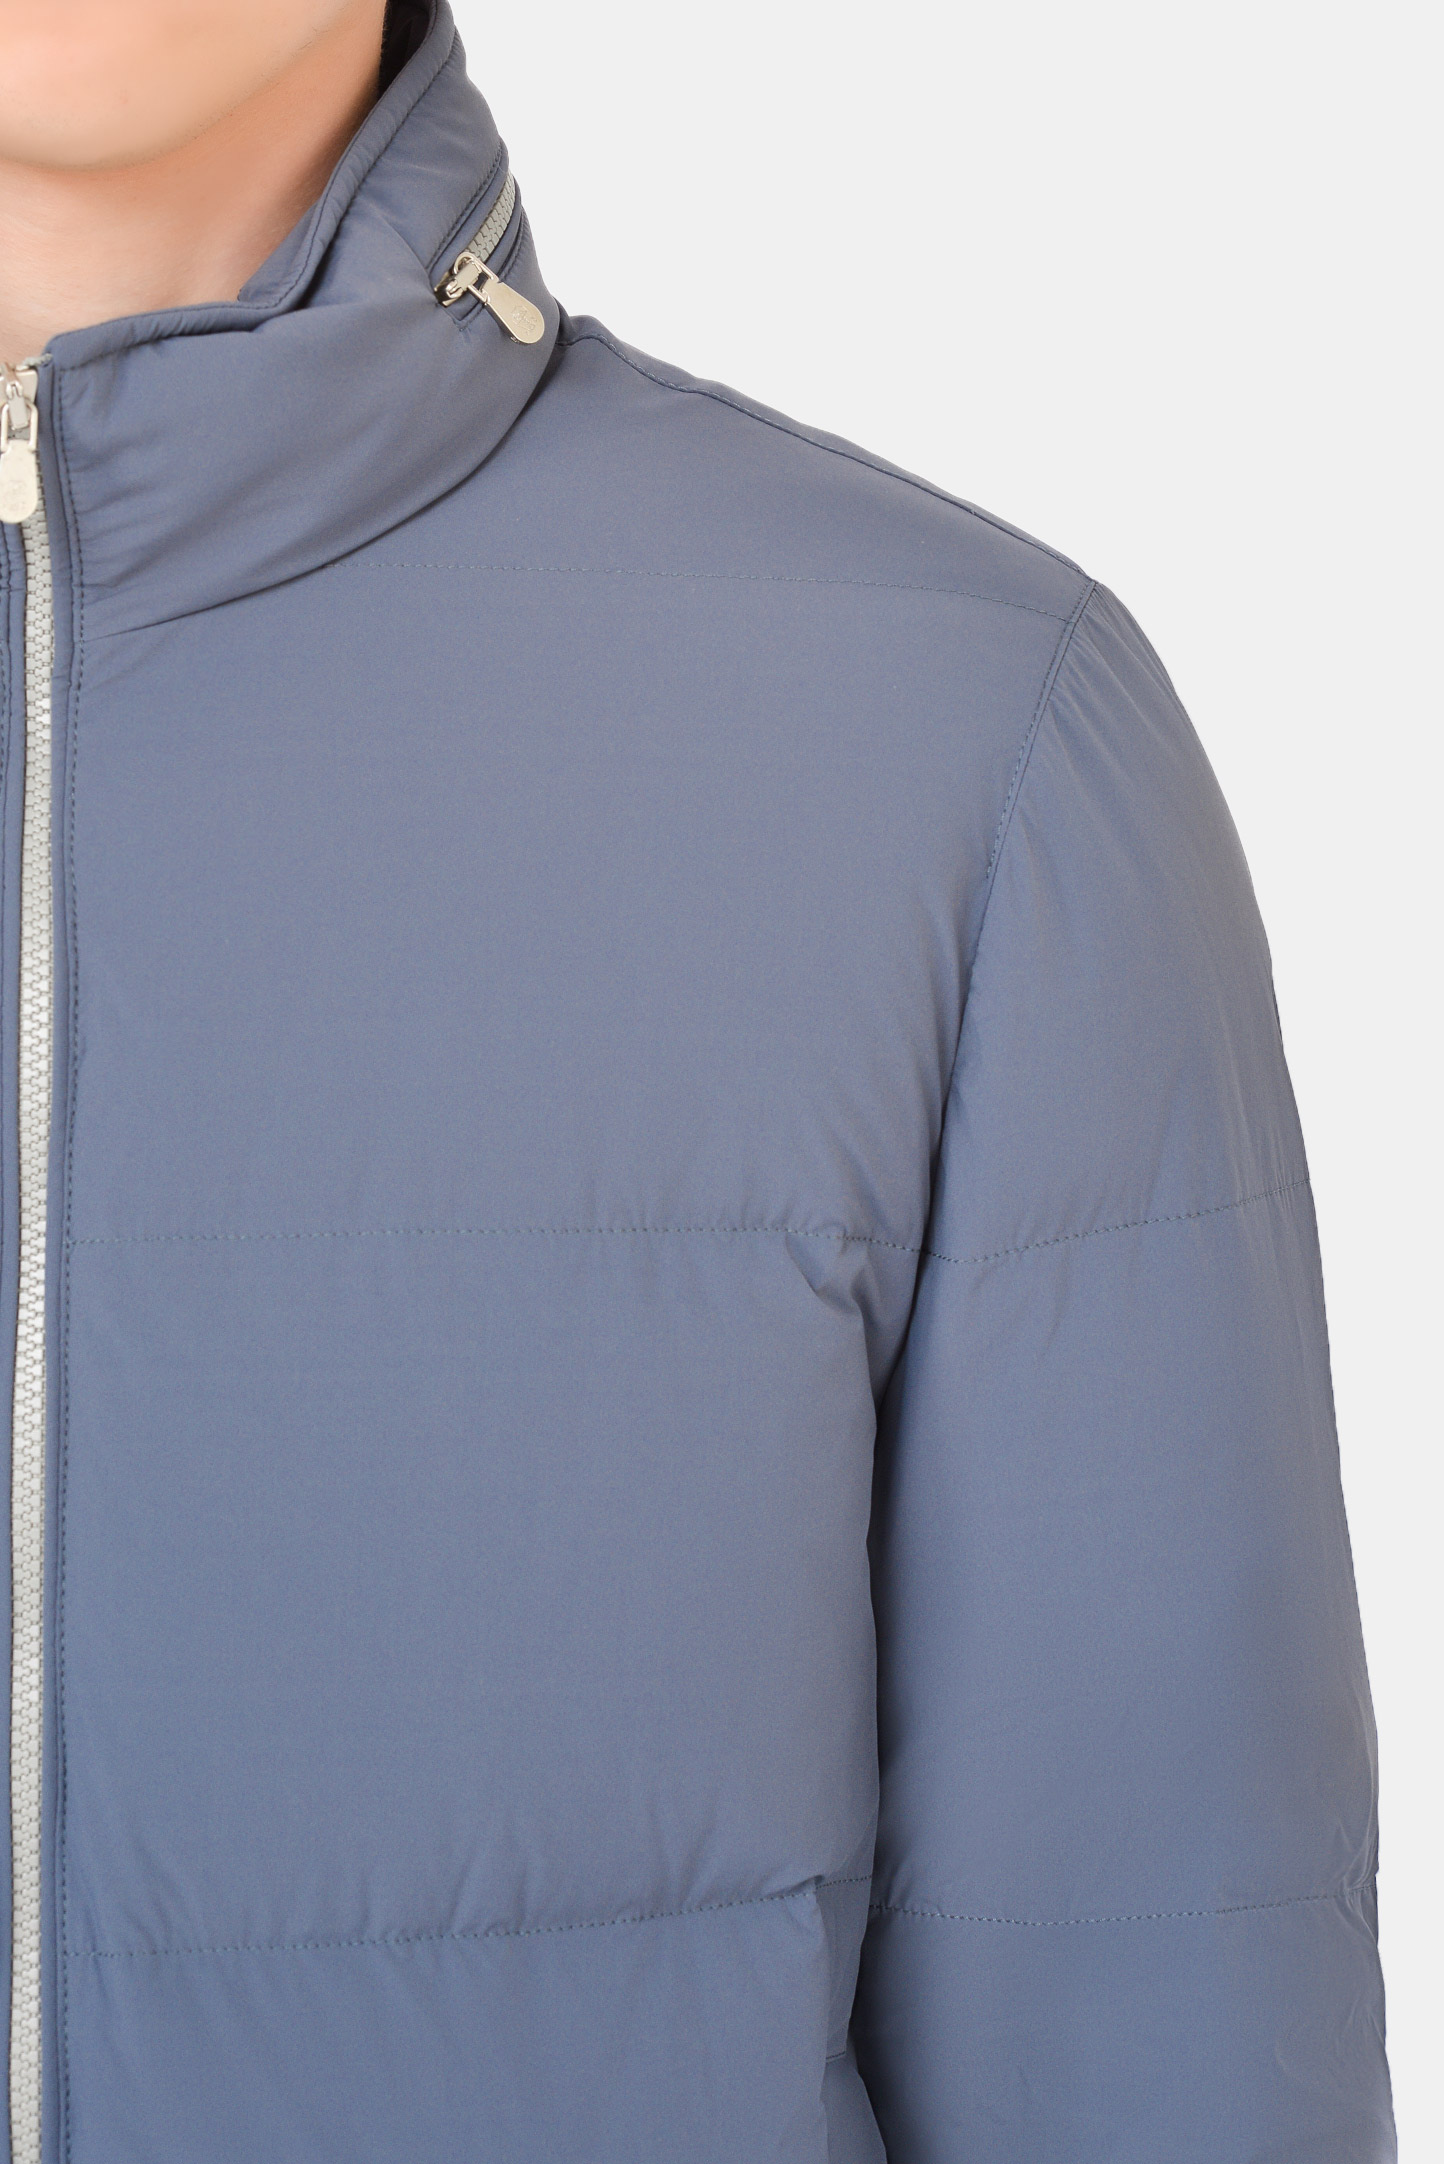 Куртка BRUNELLO  CUCINELLI ML4911819, цвет: Синий, Мужской